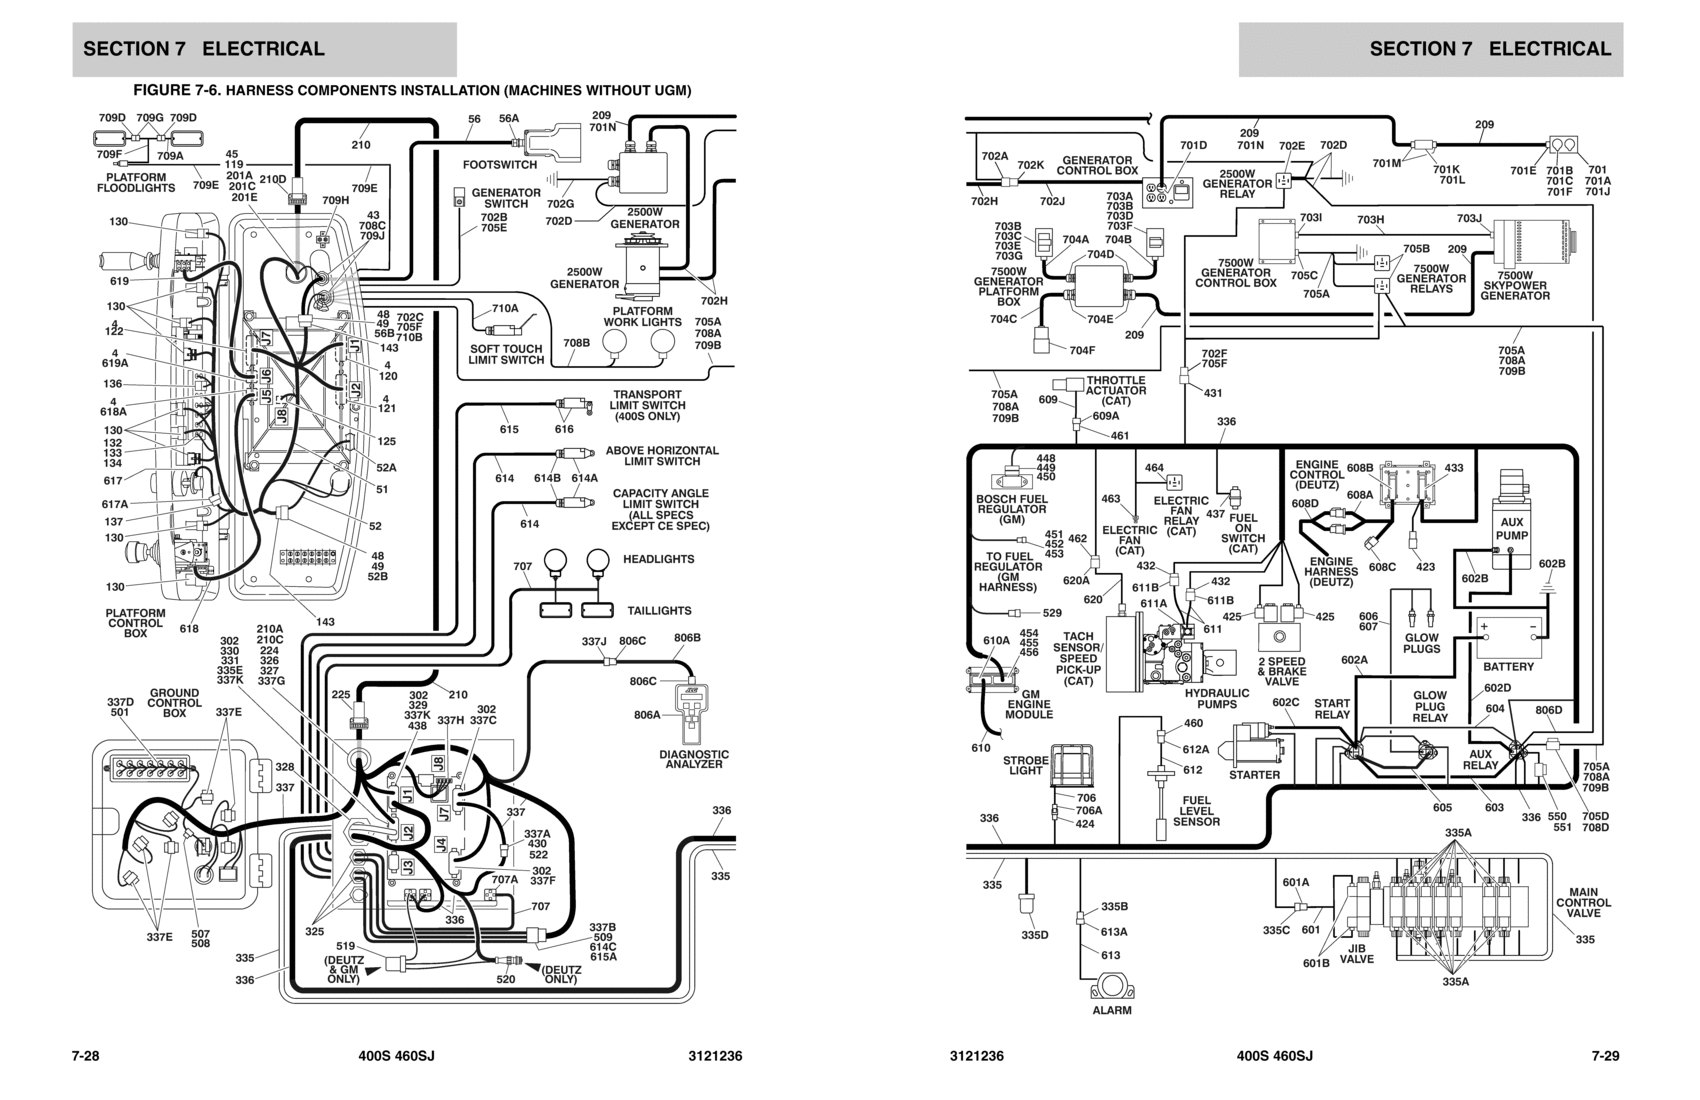 invacare pihsiang machinery wiring diagram